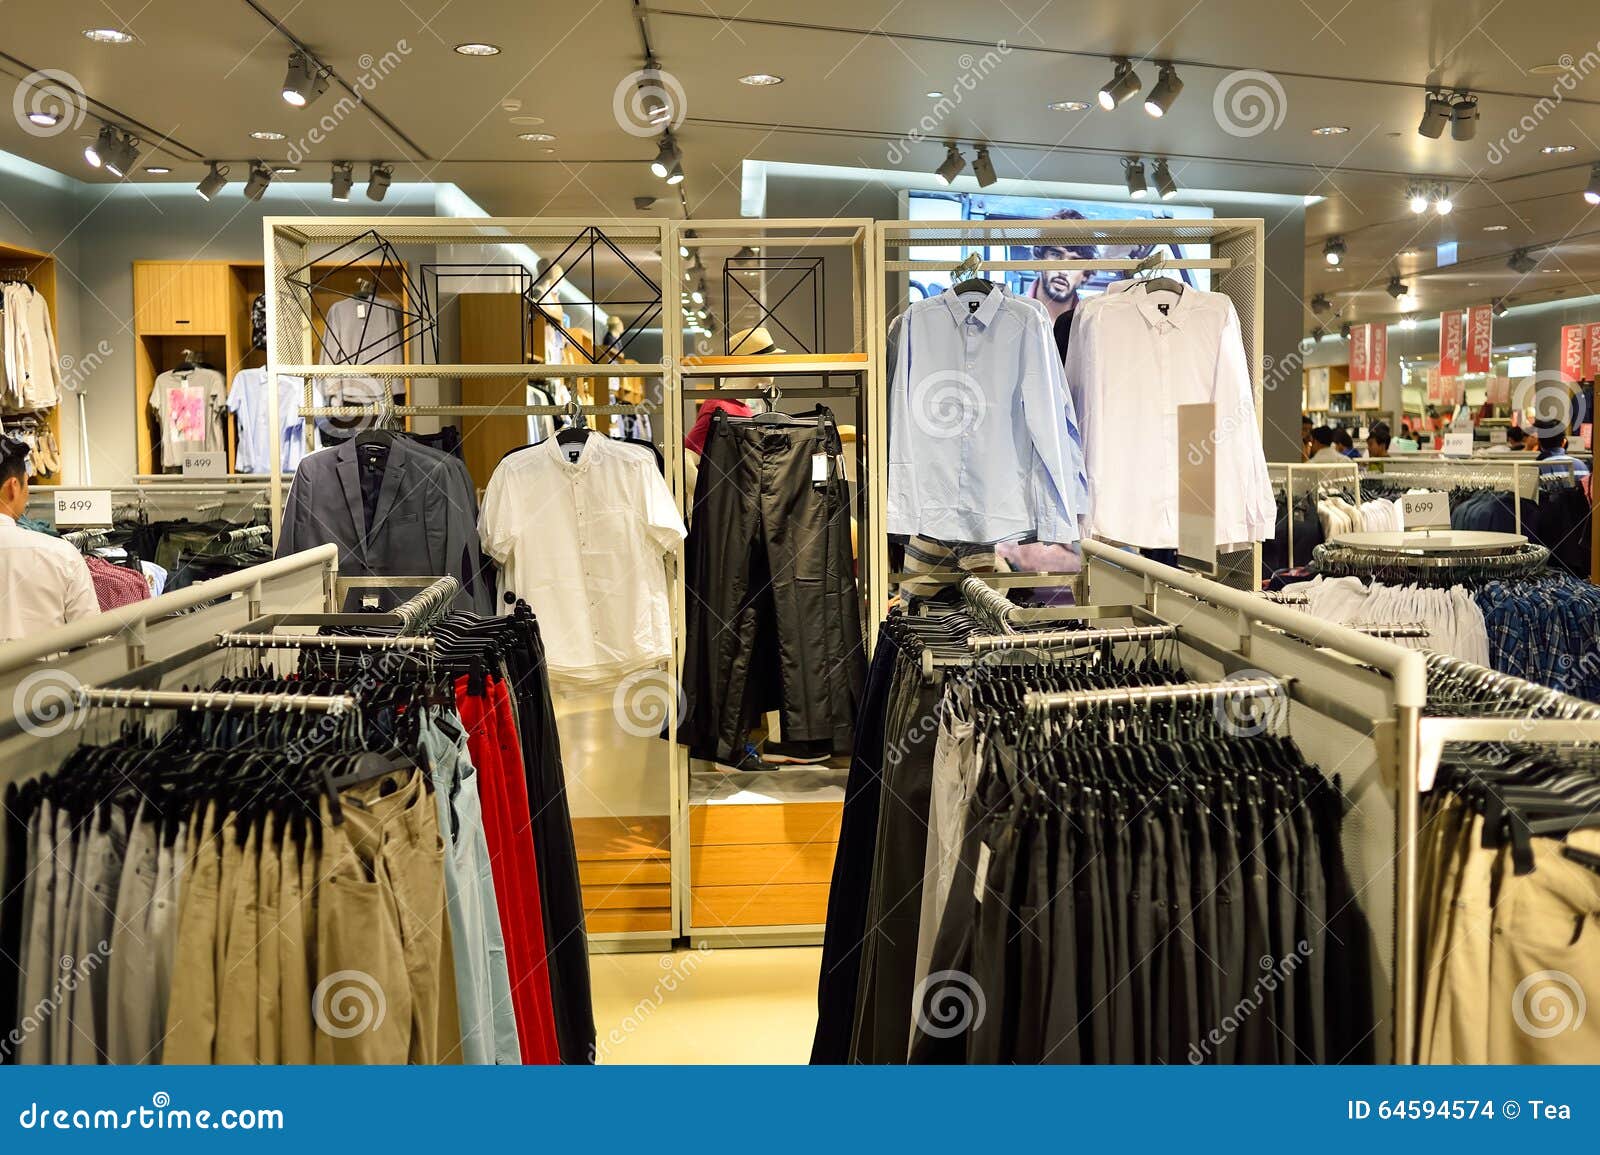 Shopping center interior editorial stock image. Image of asian - 64594574